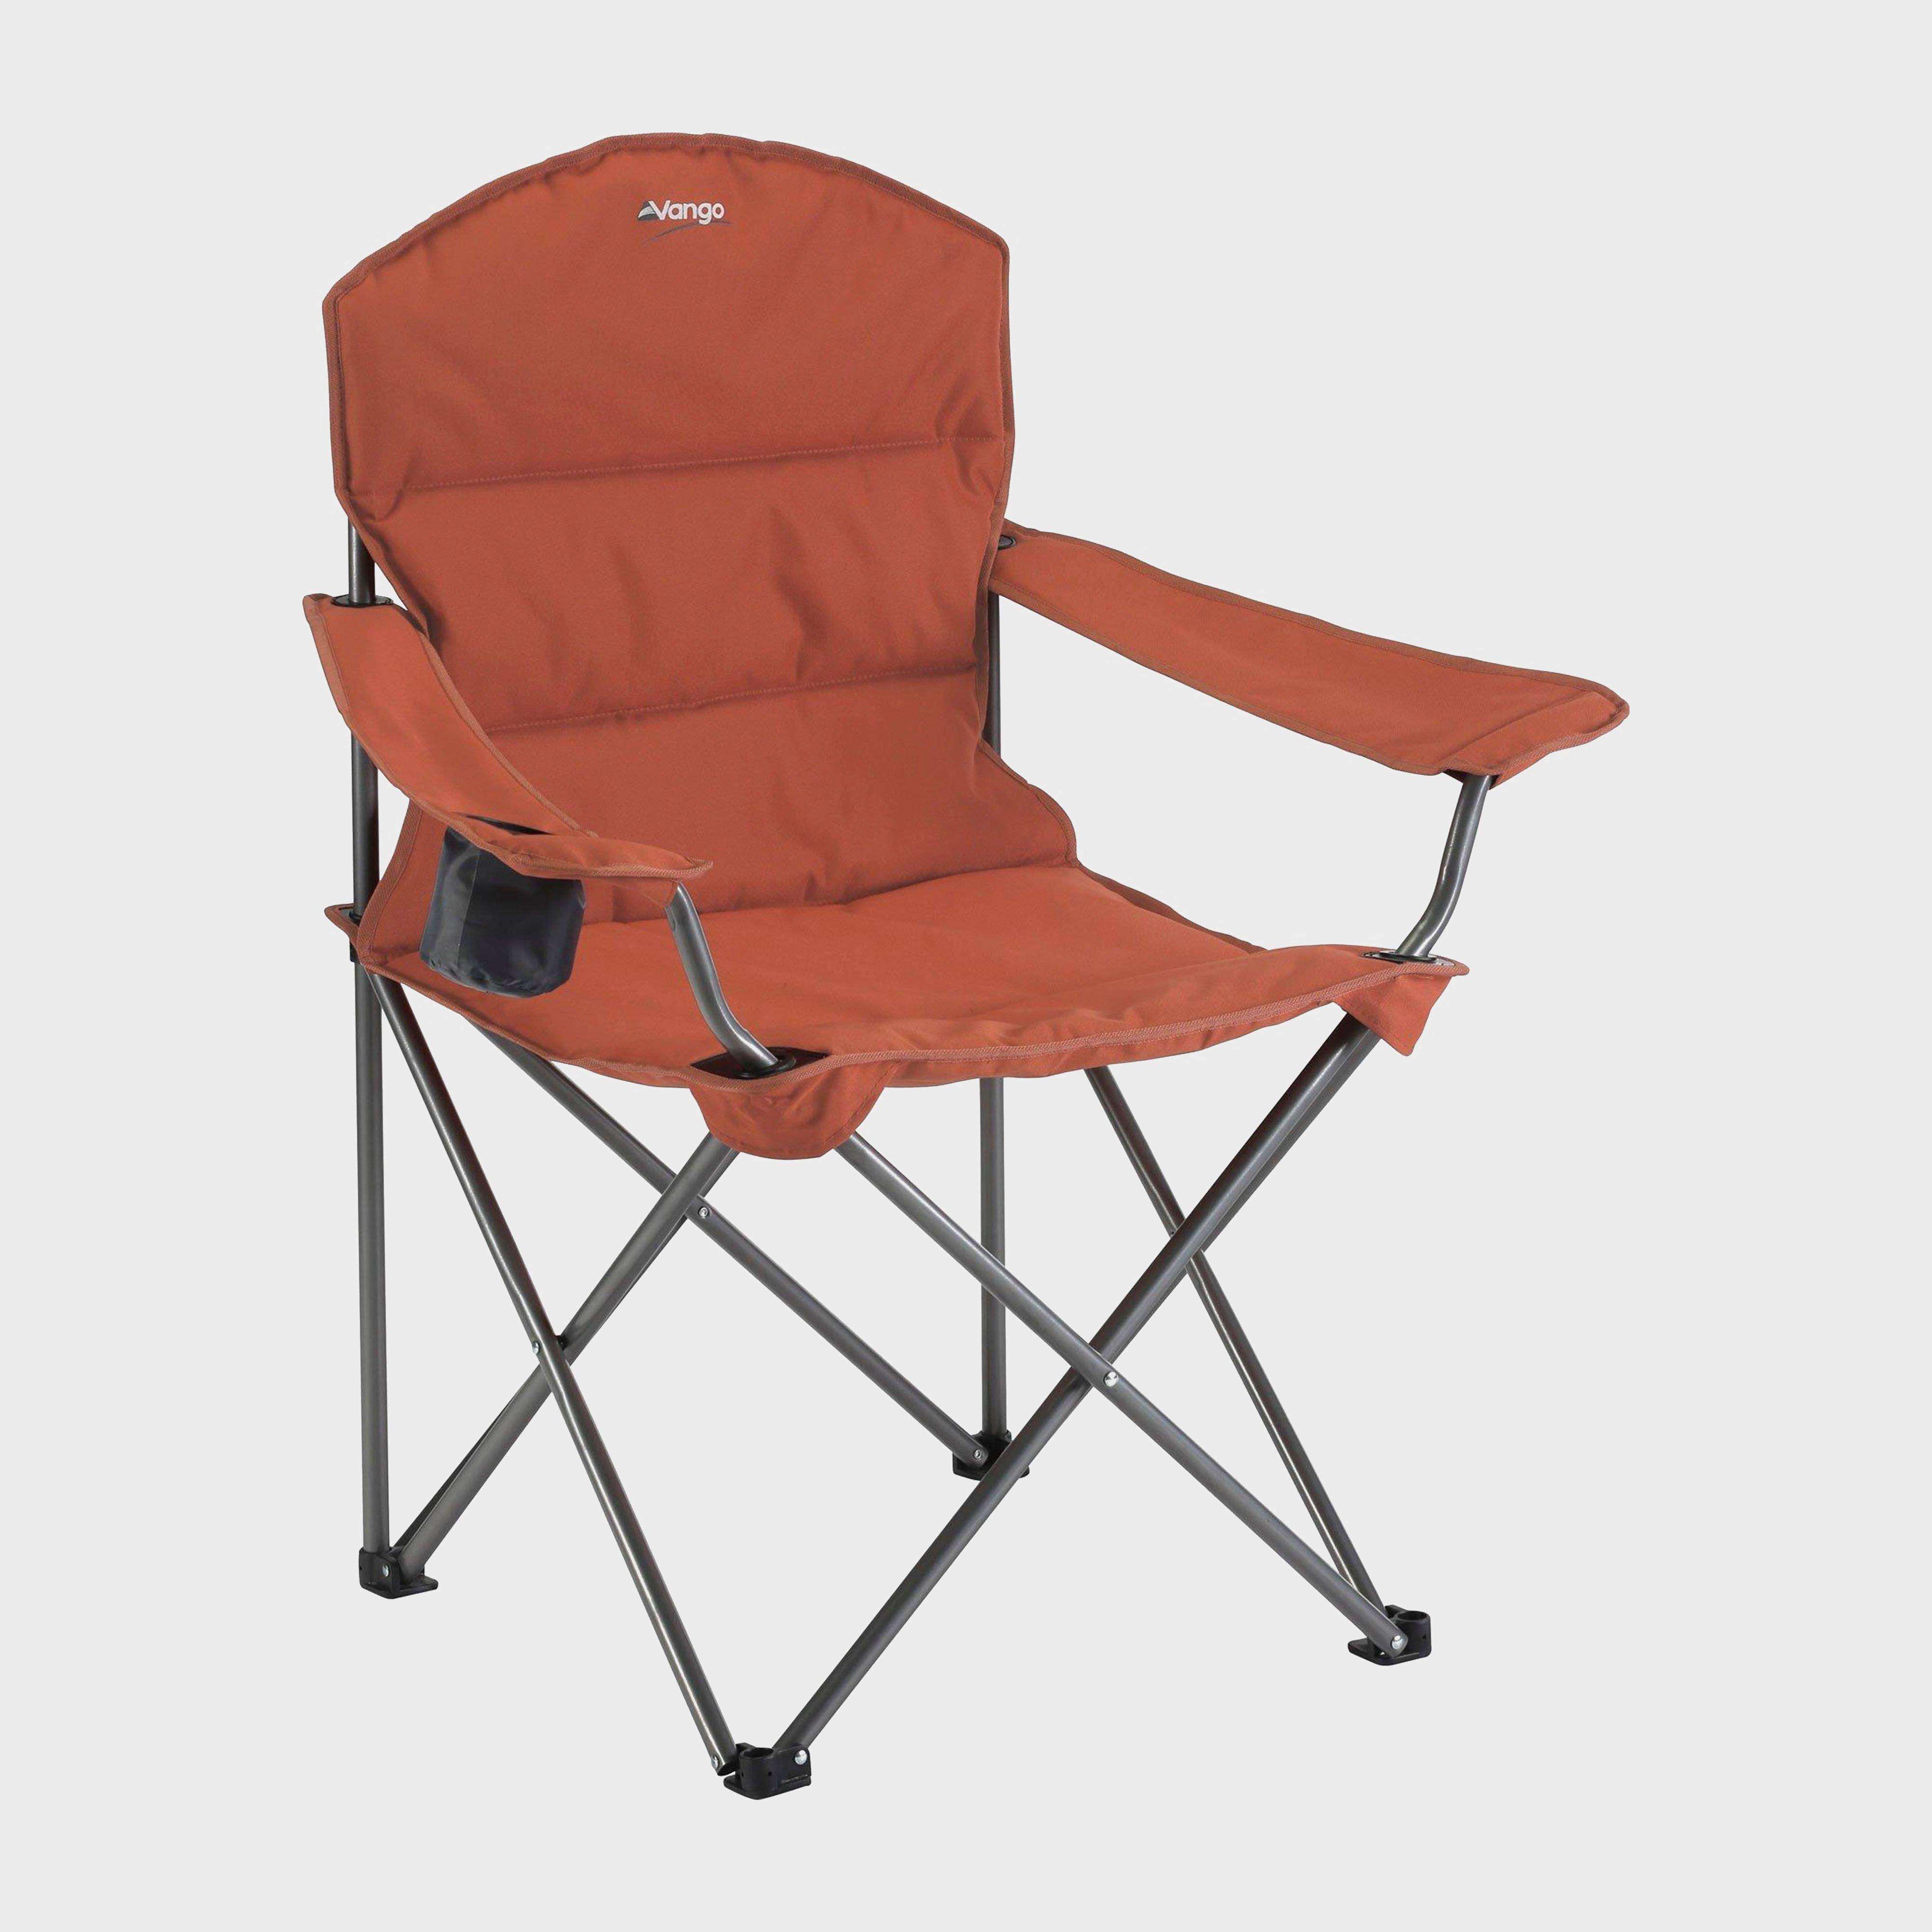 Vango Samson Oversized Chair - Orange/orange  Orange/orange